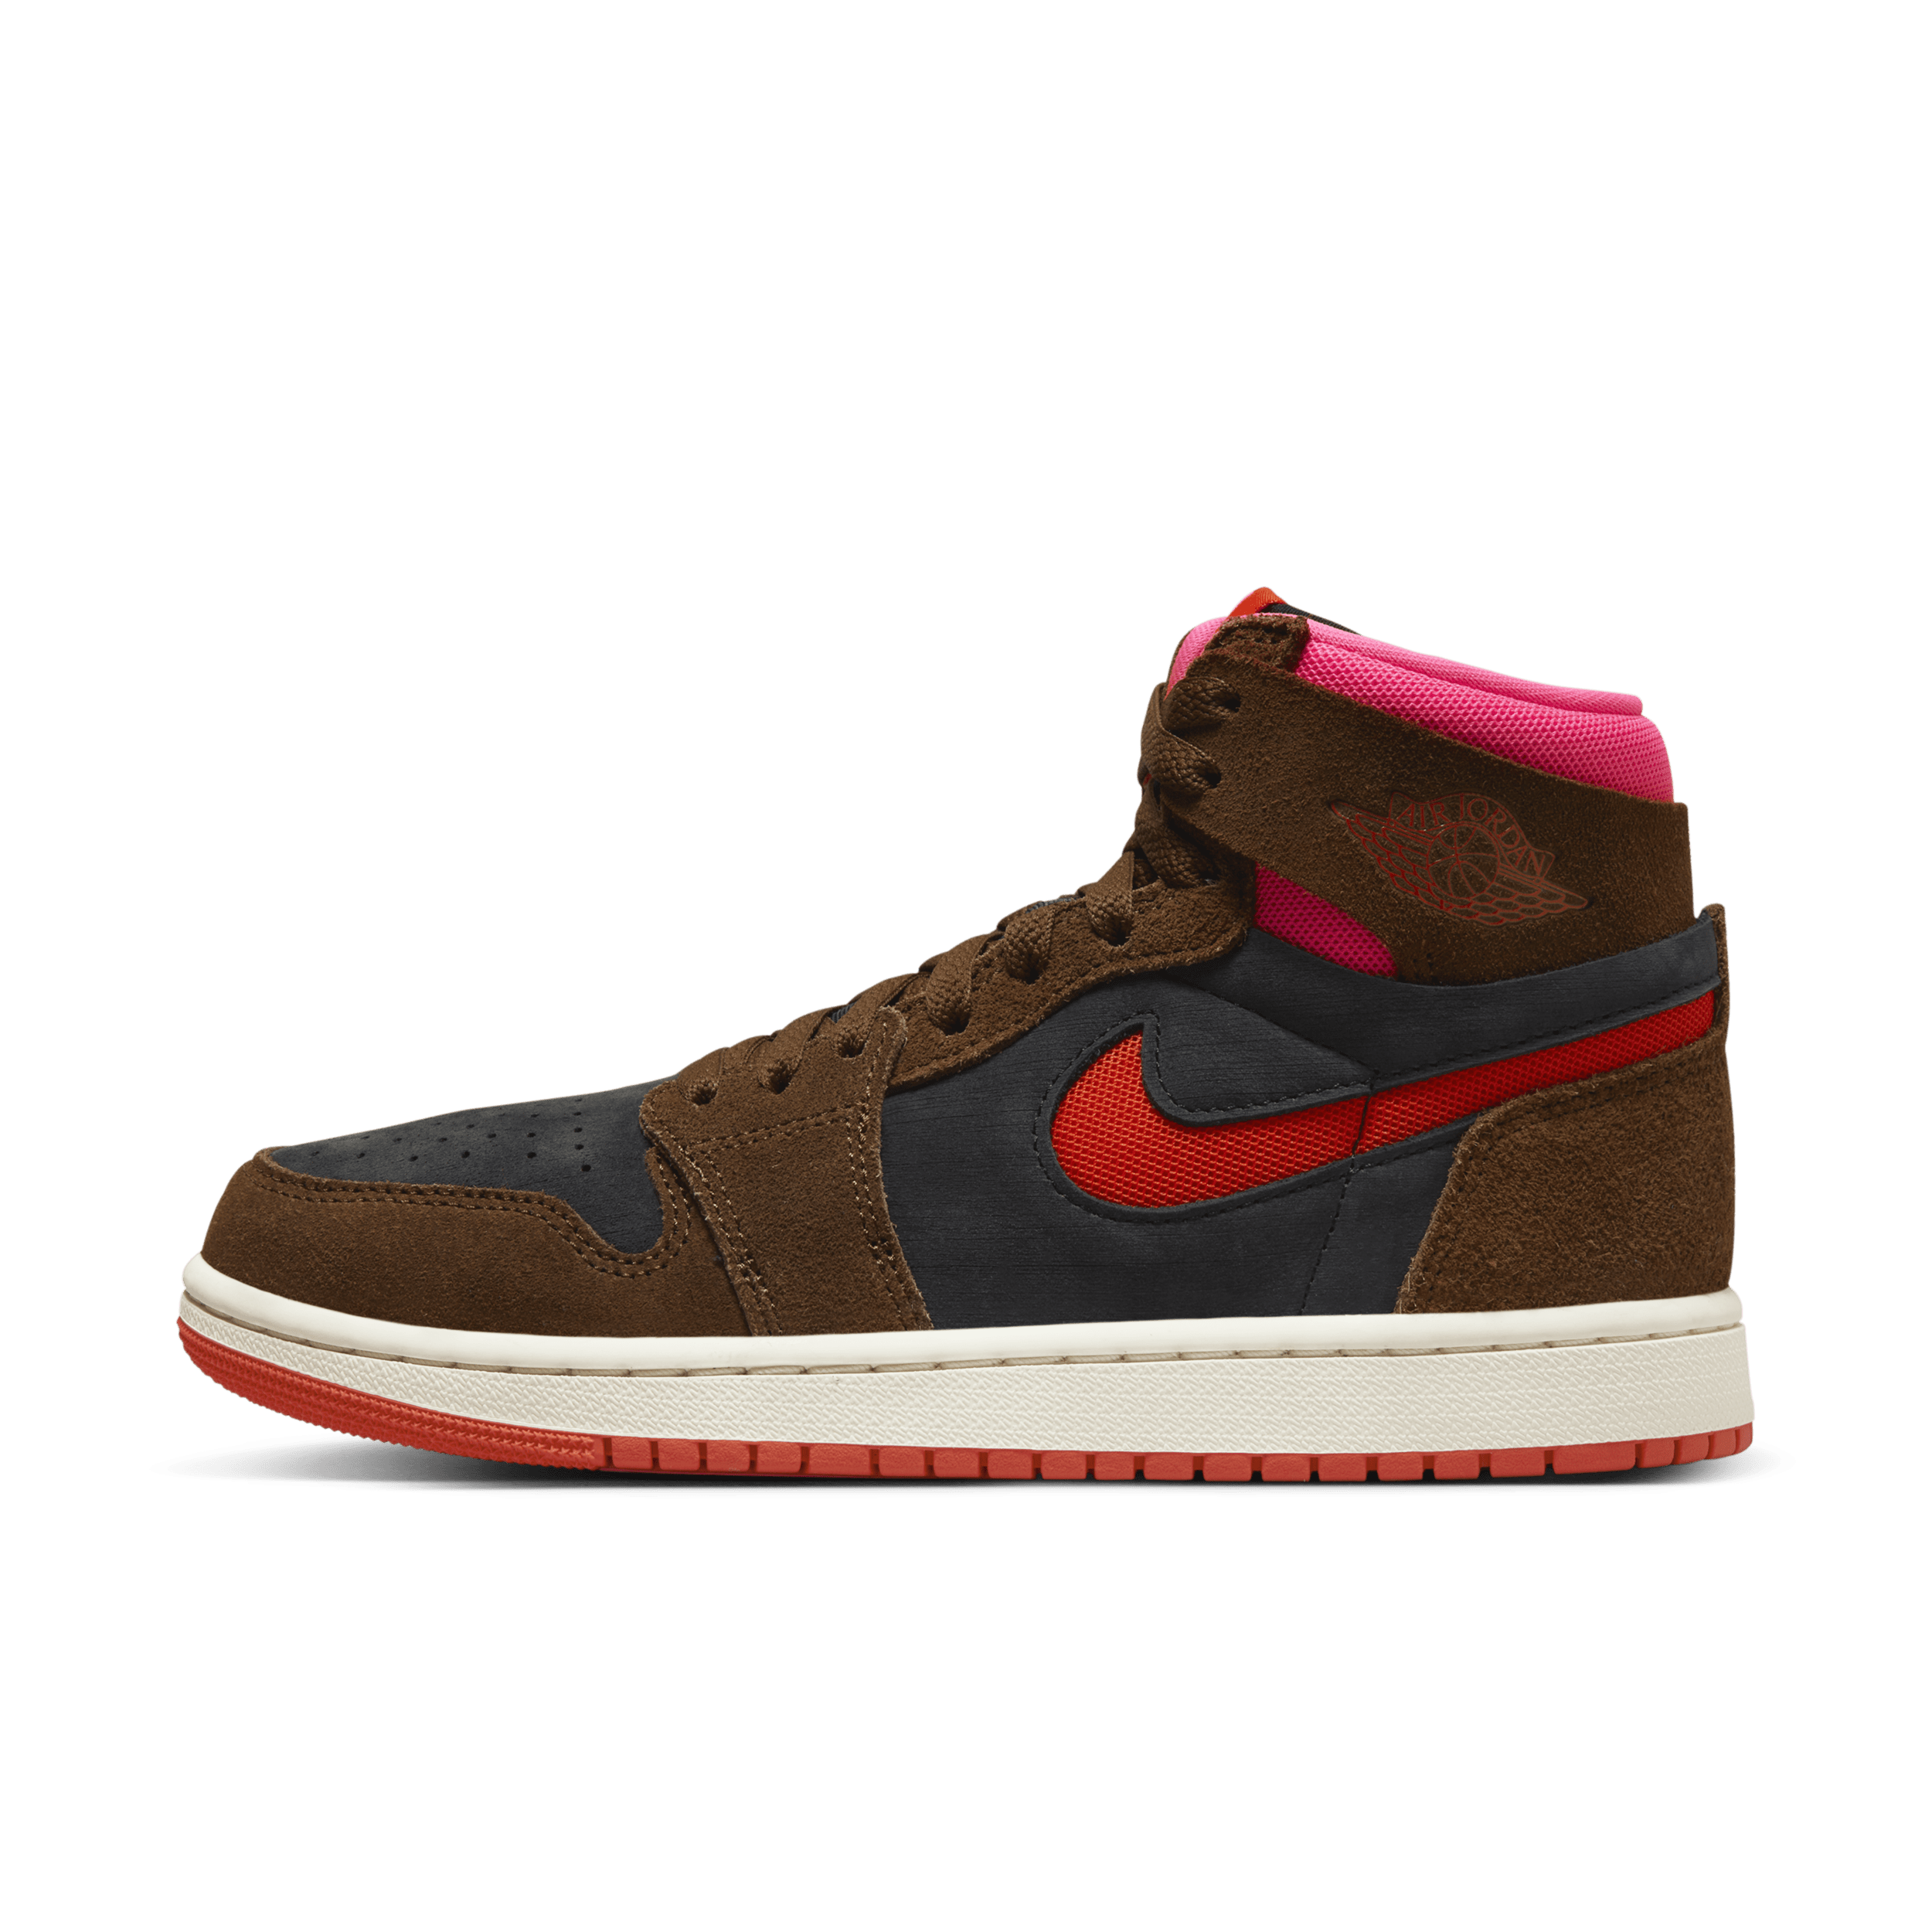 Air Jordan 1 Zoom CMFT 2-sko til kvinder - brun